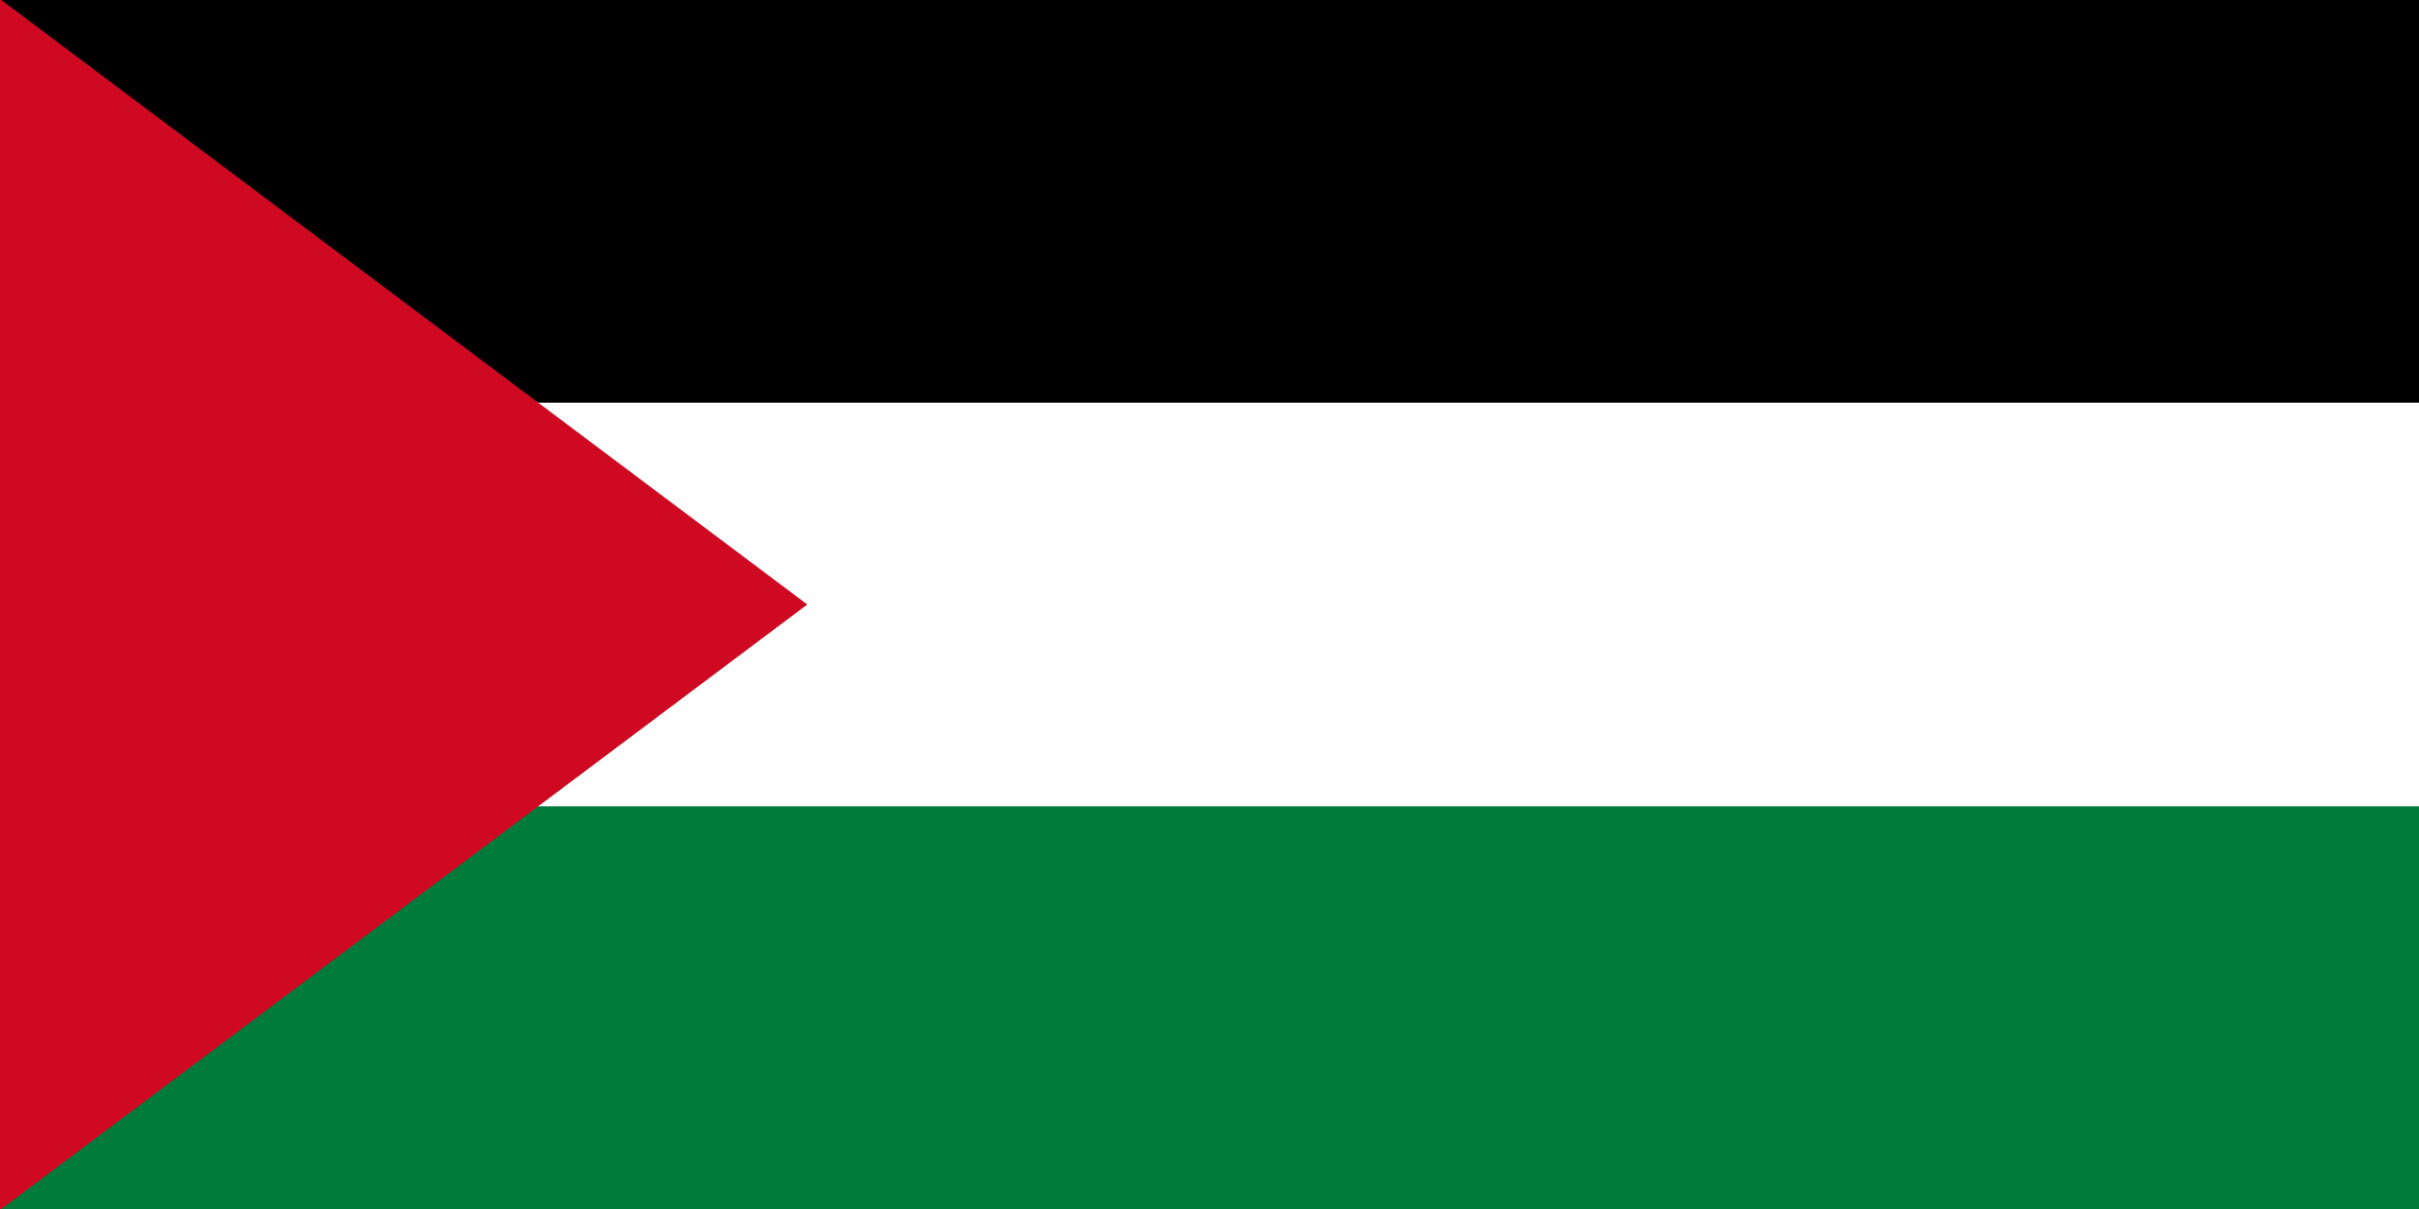 File:Flagge Palaestina.jpg - Wikimedia Commons